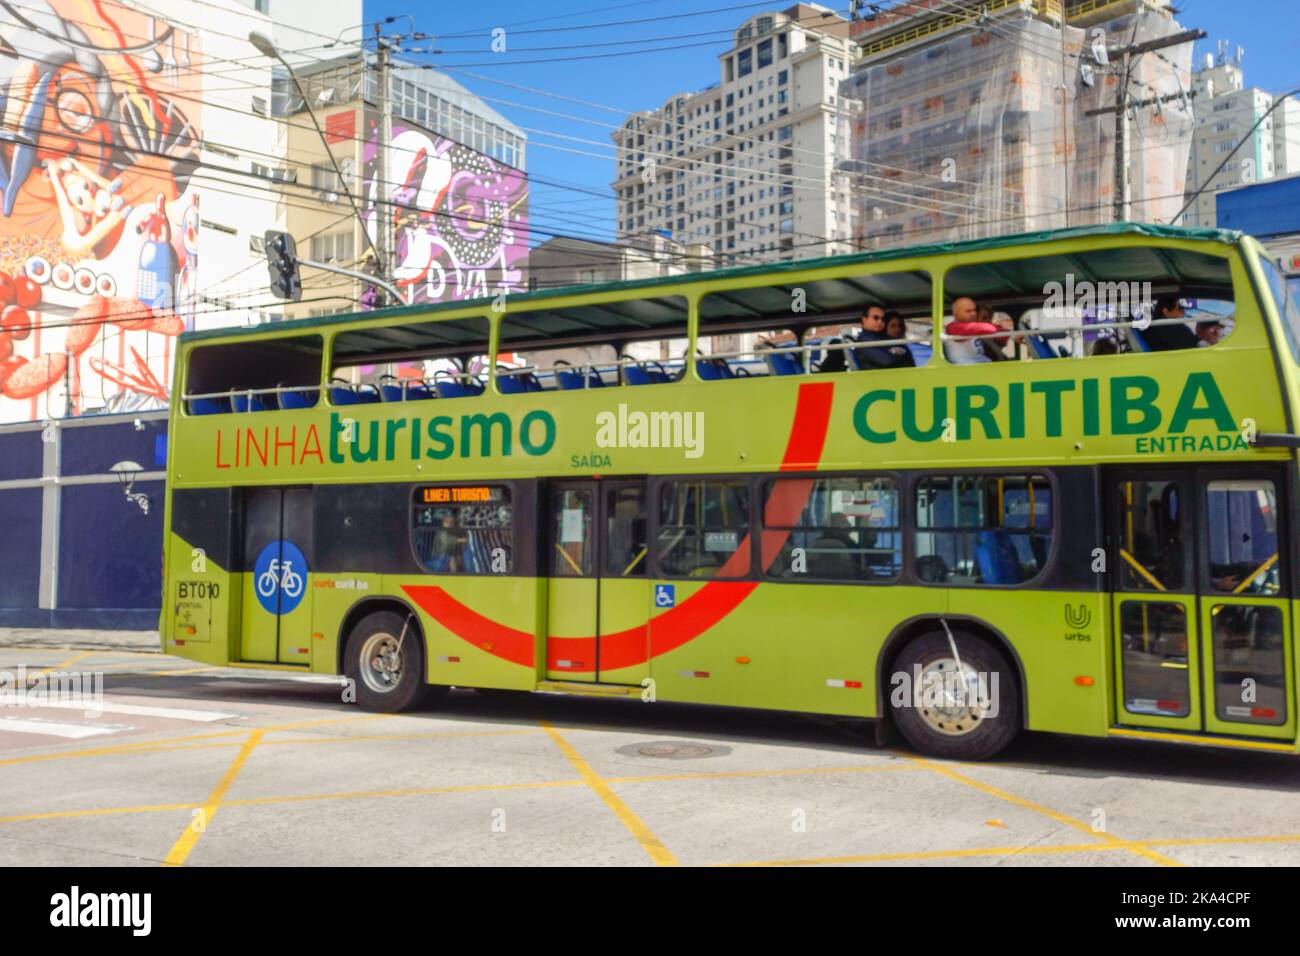 Curitiba, Brazil: touristic bus riding passengers on city streets Stock Photo